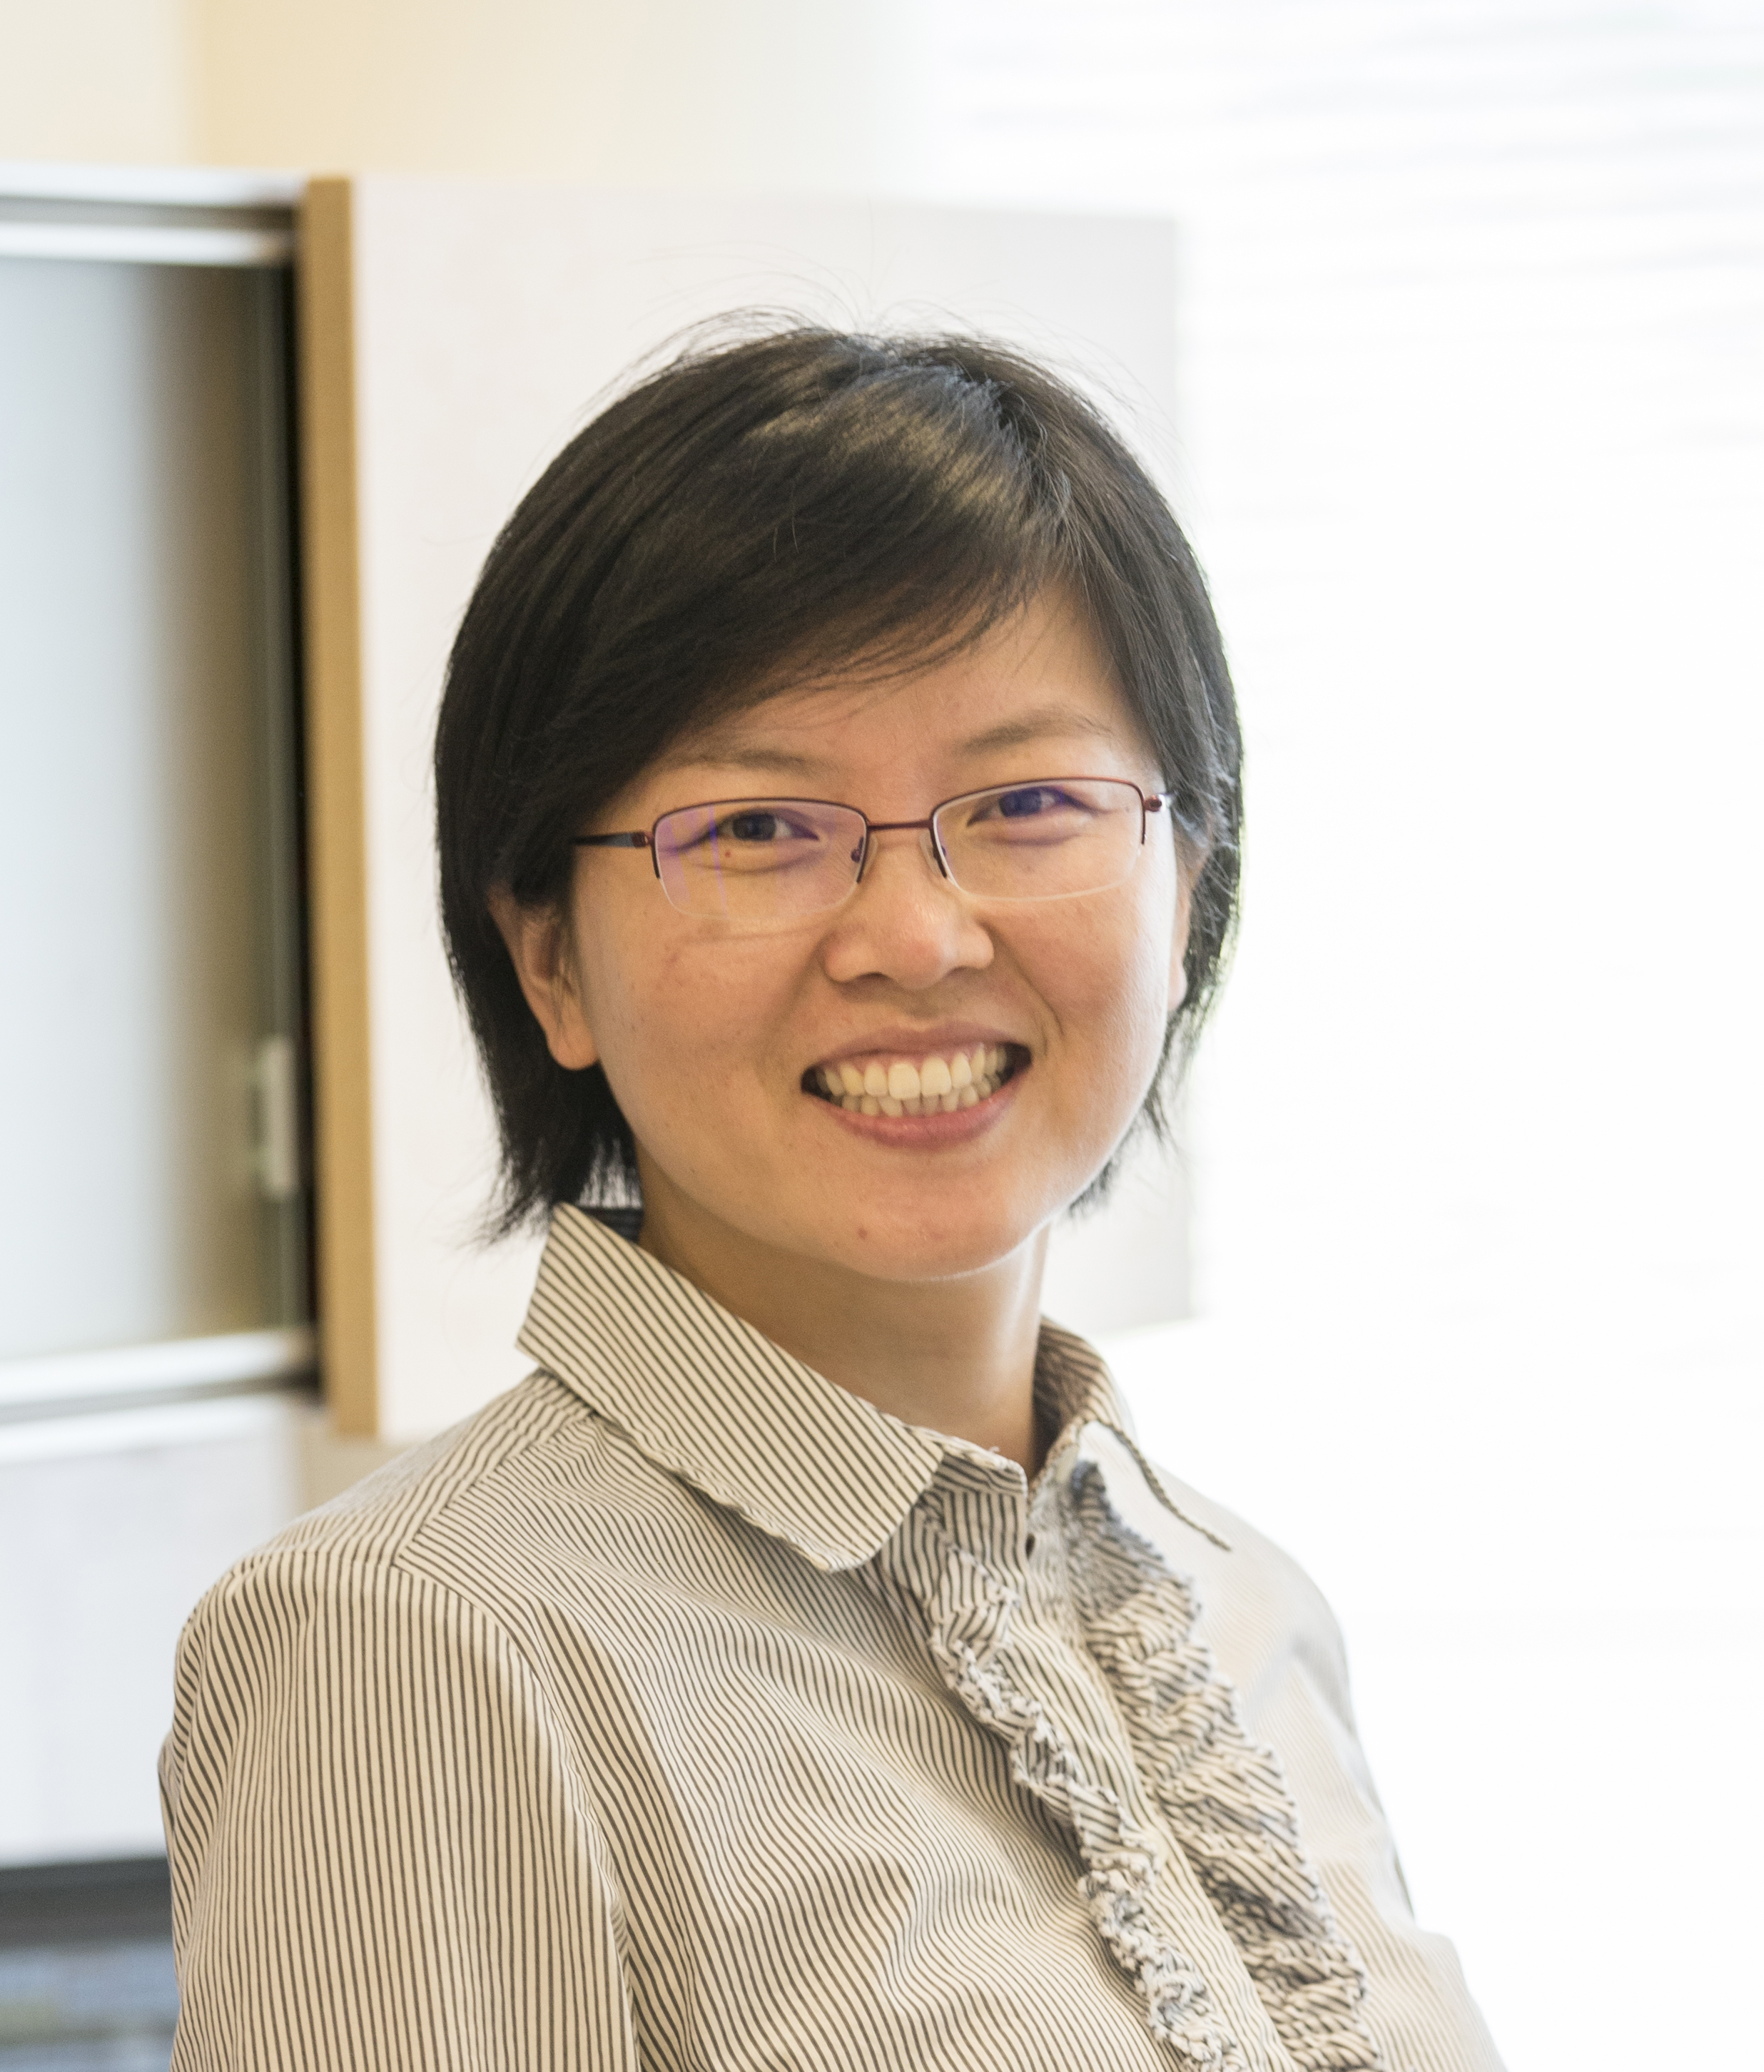 Headshot photo of Yali Jia, Ph.D.